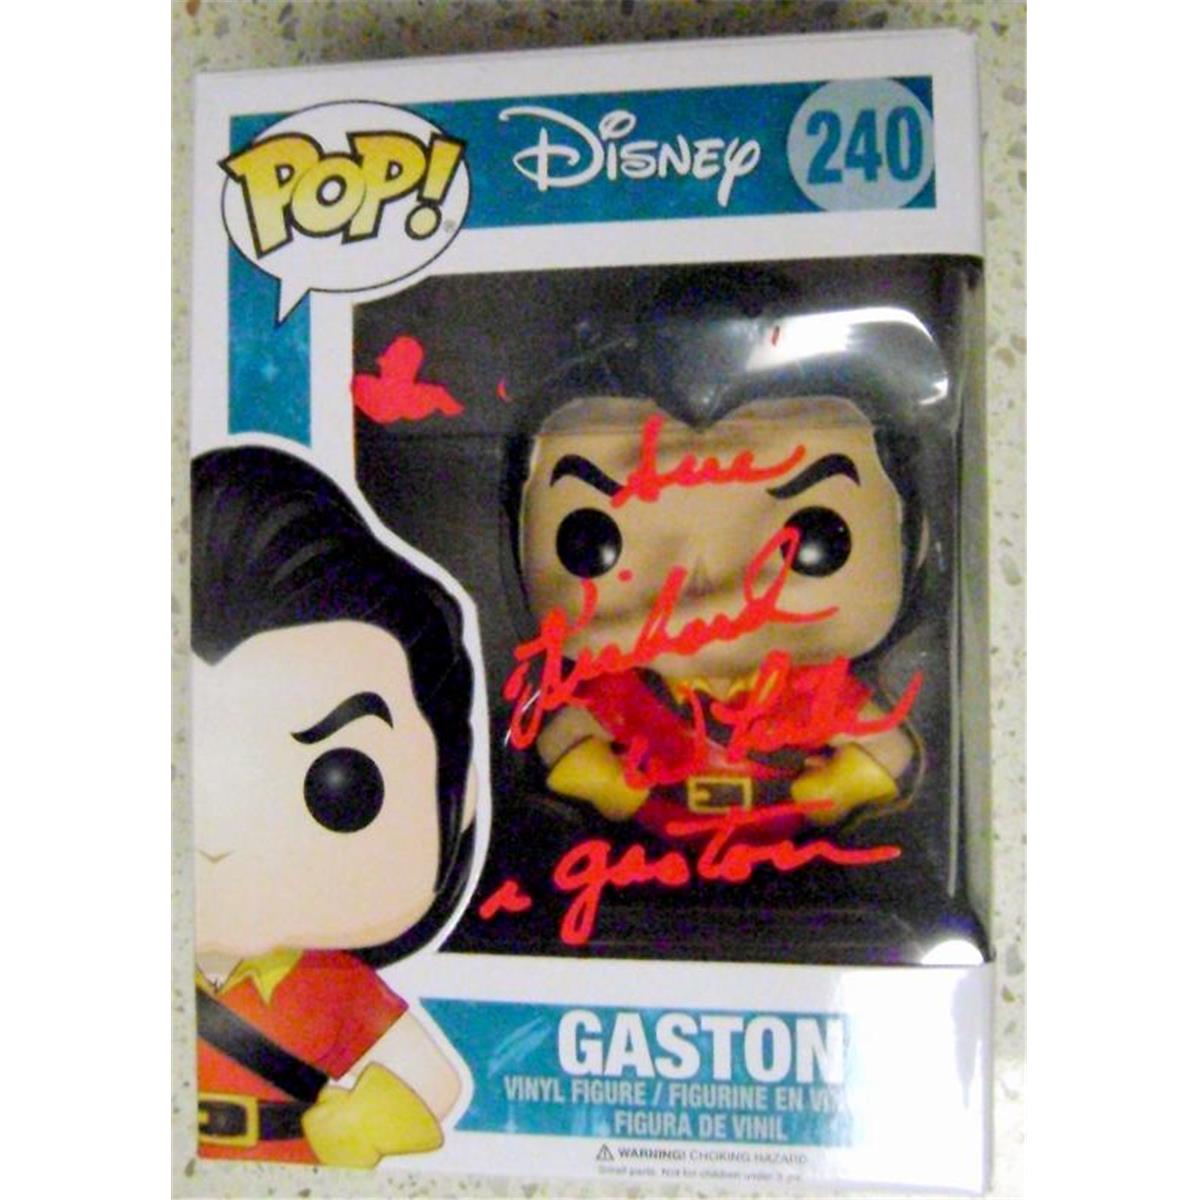 432463 Richard White Autographed Gaston Beauty Beast Funko Pop Toy Figure on Box 240 Disney -  Autograph Warehouse